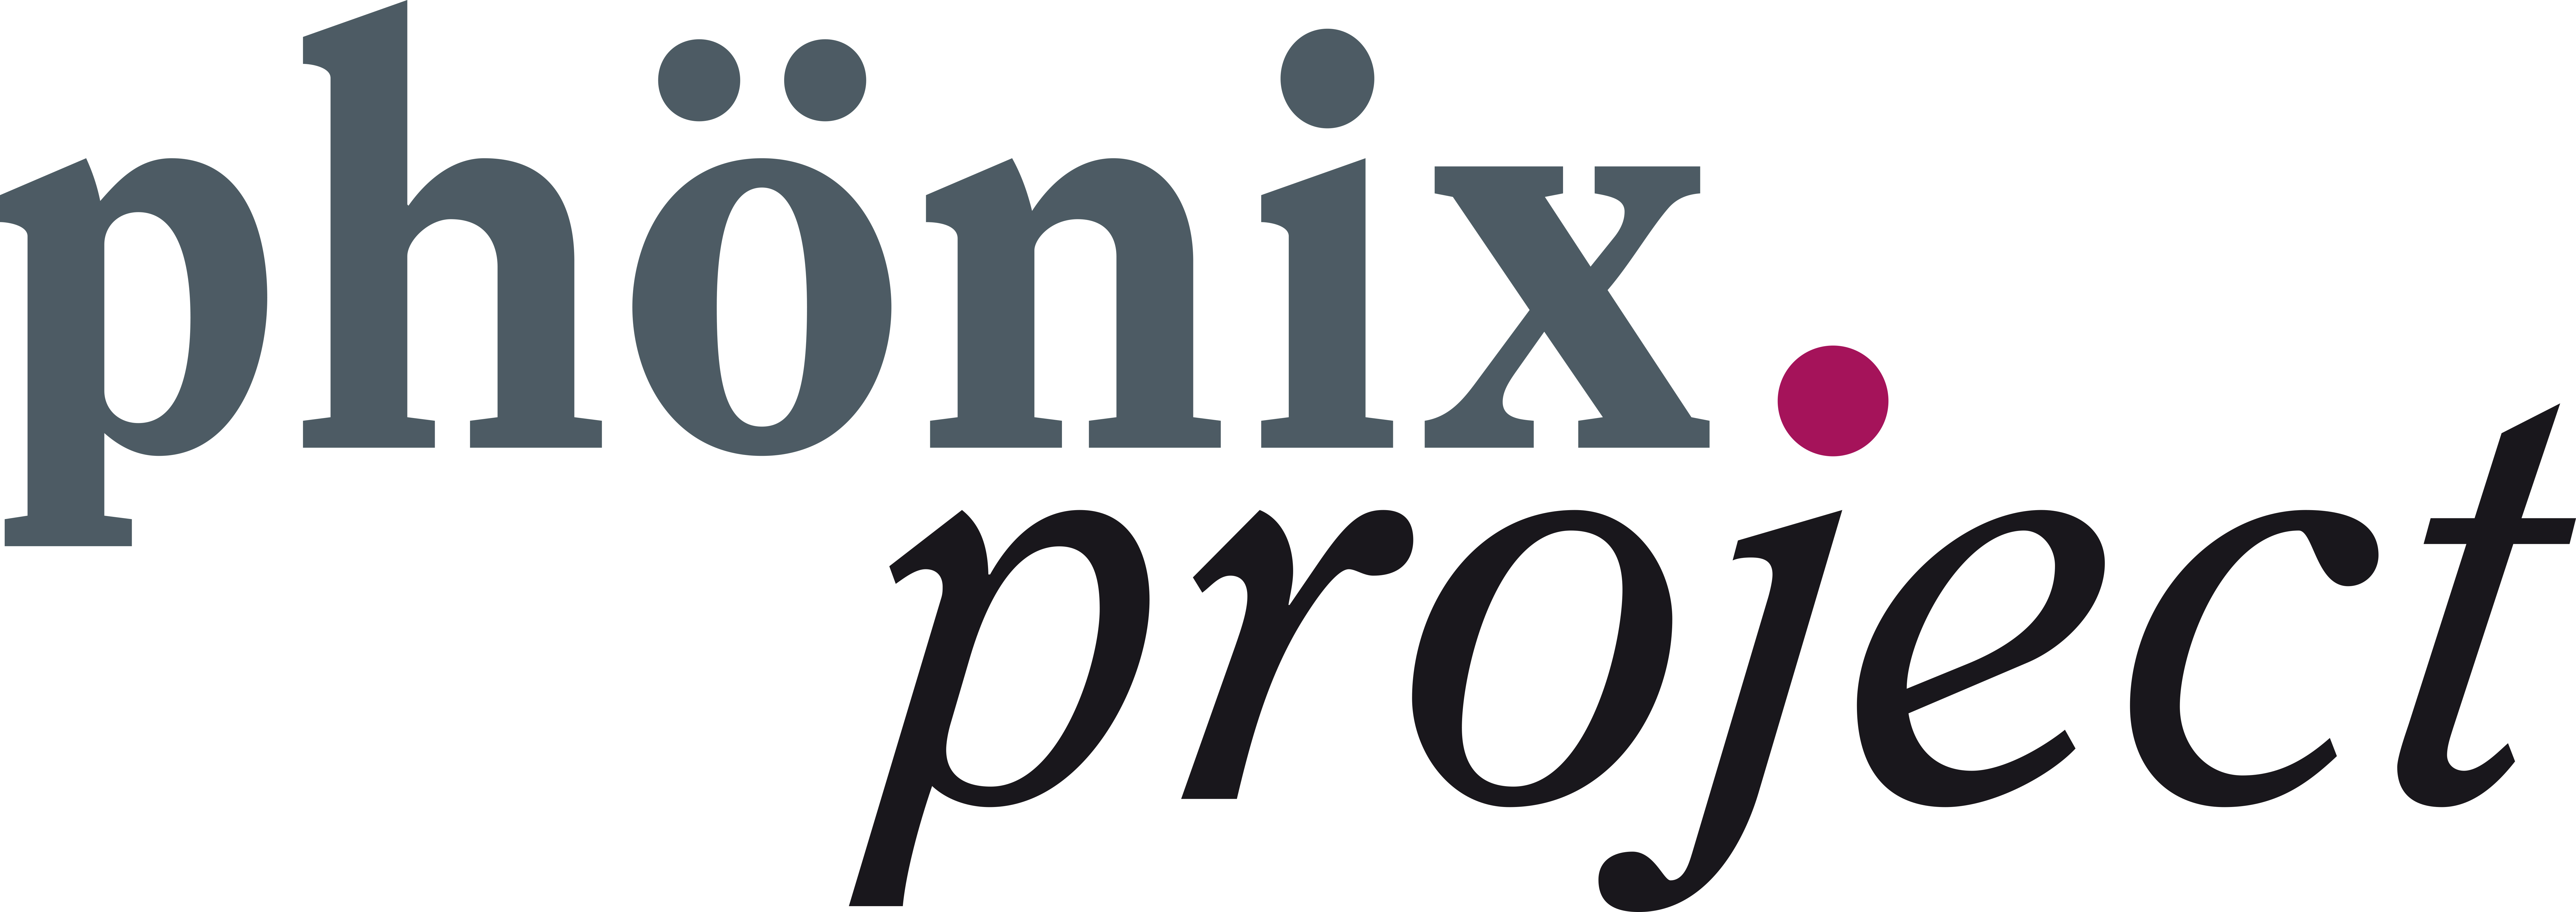 phönix-project